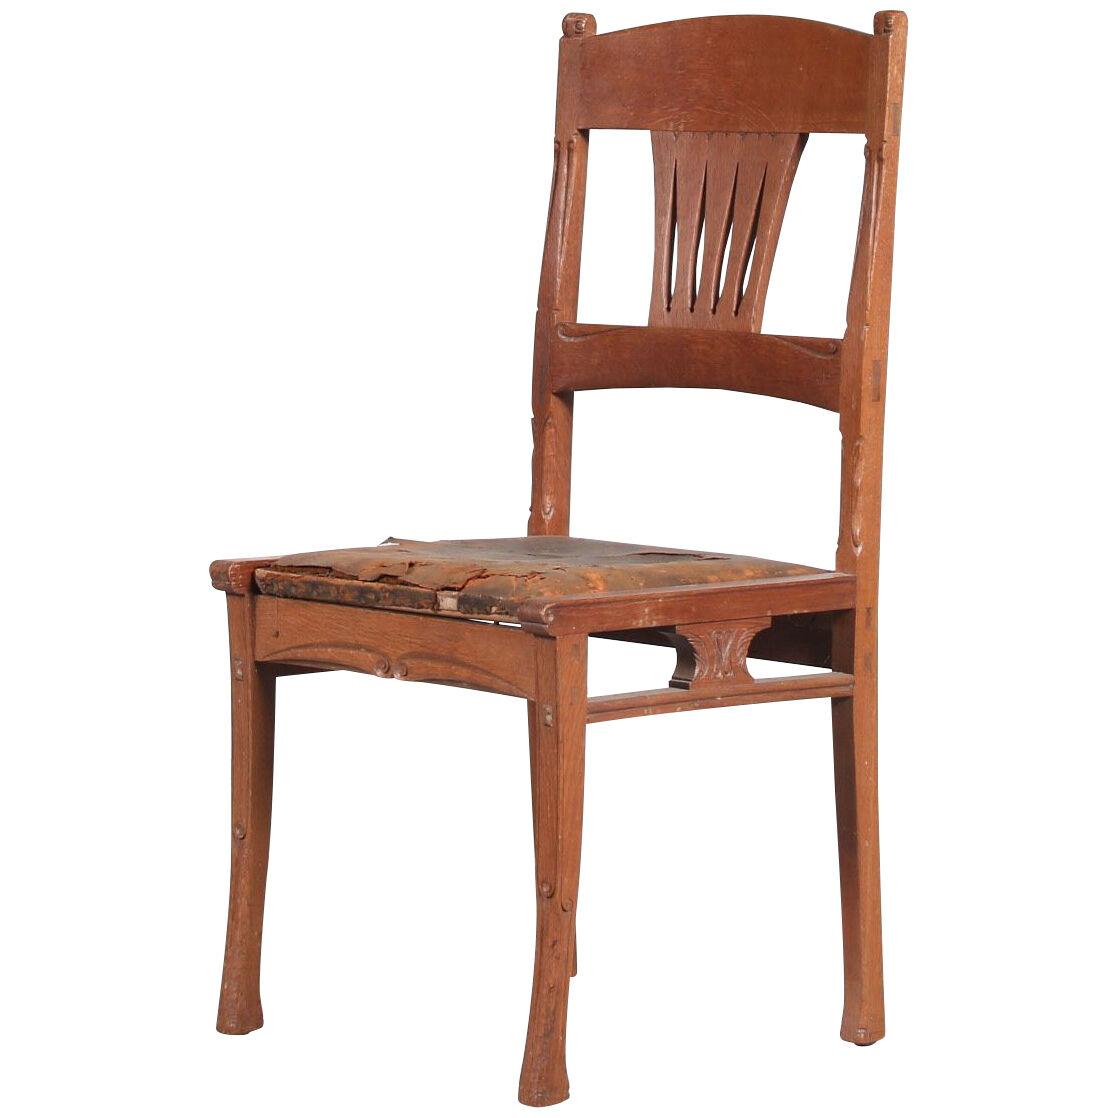 Chair by Gerrit Willem Dijsselhof for E.J. van Wisselingh, the Netherlands 1900